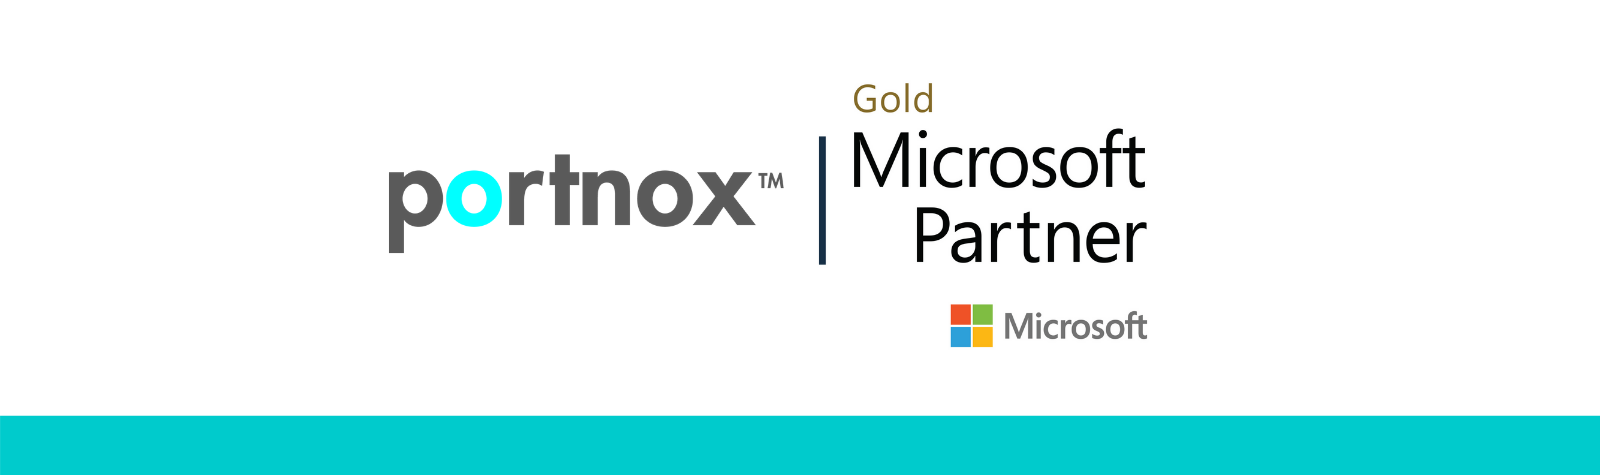 Portnox Gold Microsoft Partner